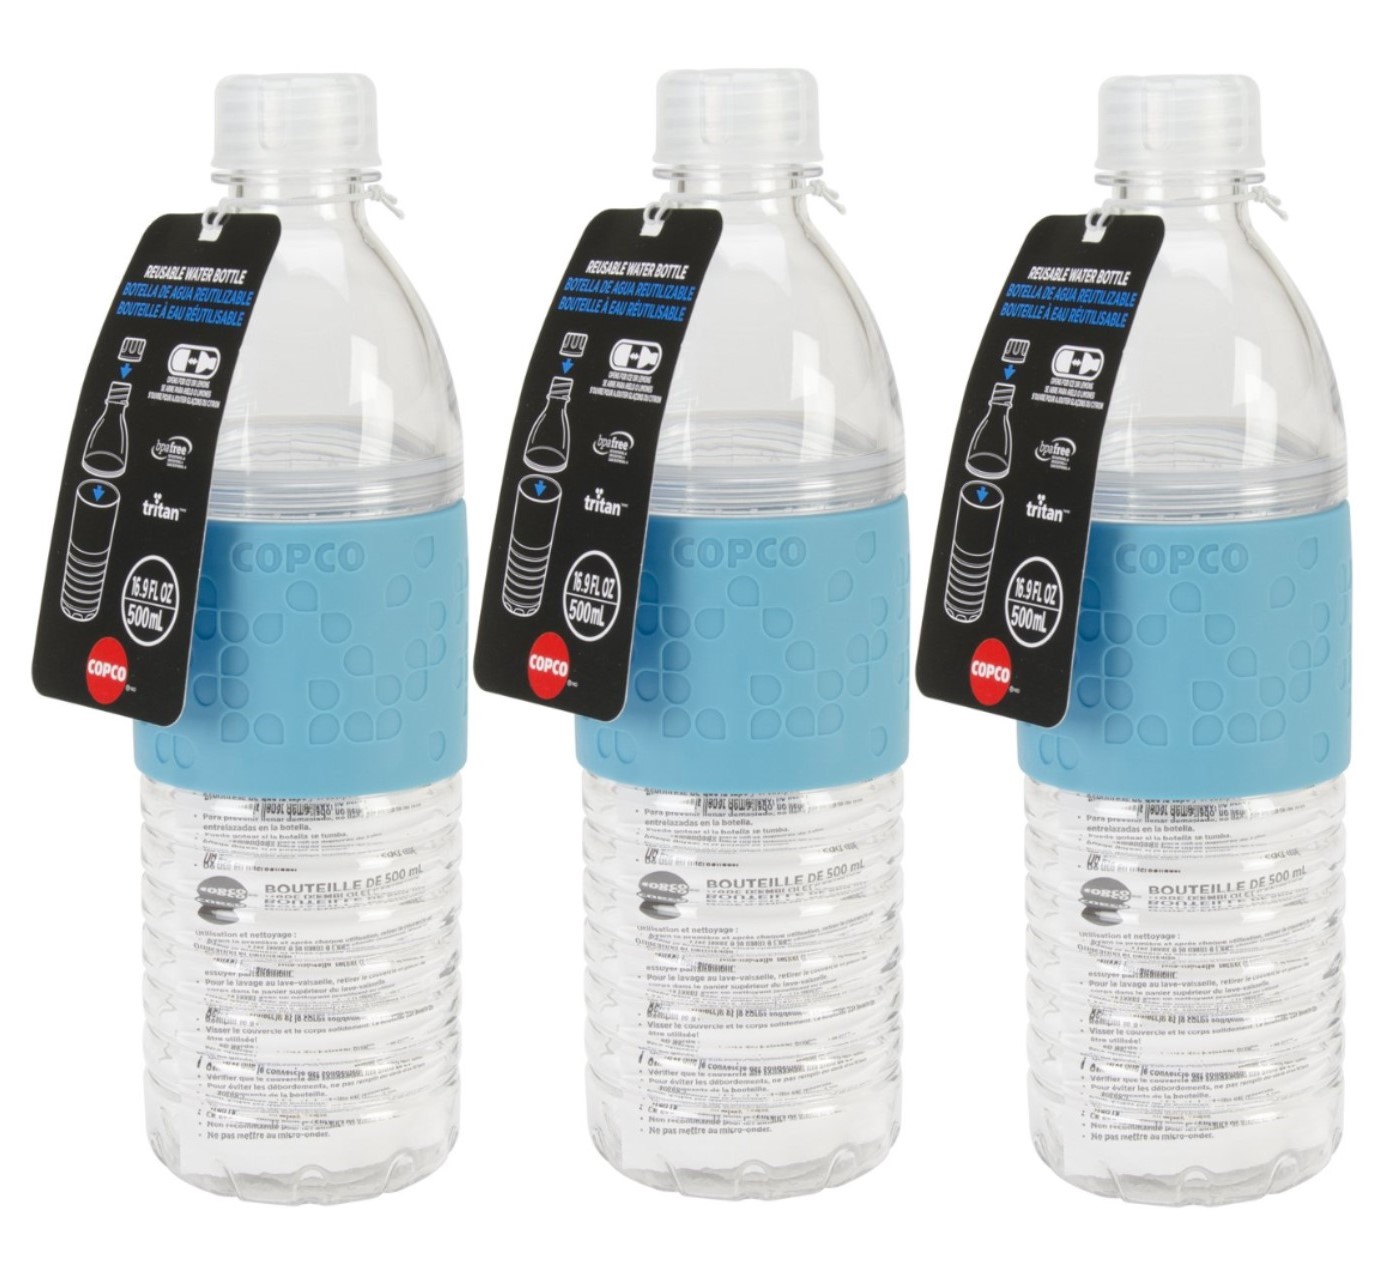 7 Pack (16.9 FL. OZ.) Wc Water Bottles – WC Water Bottles